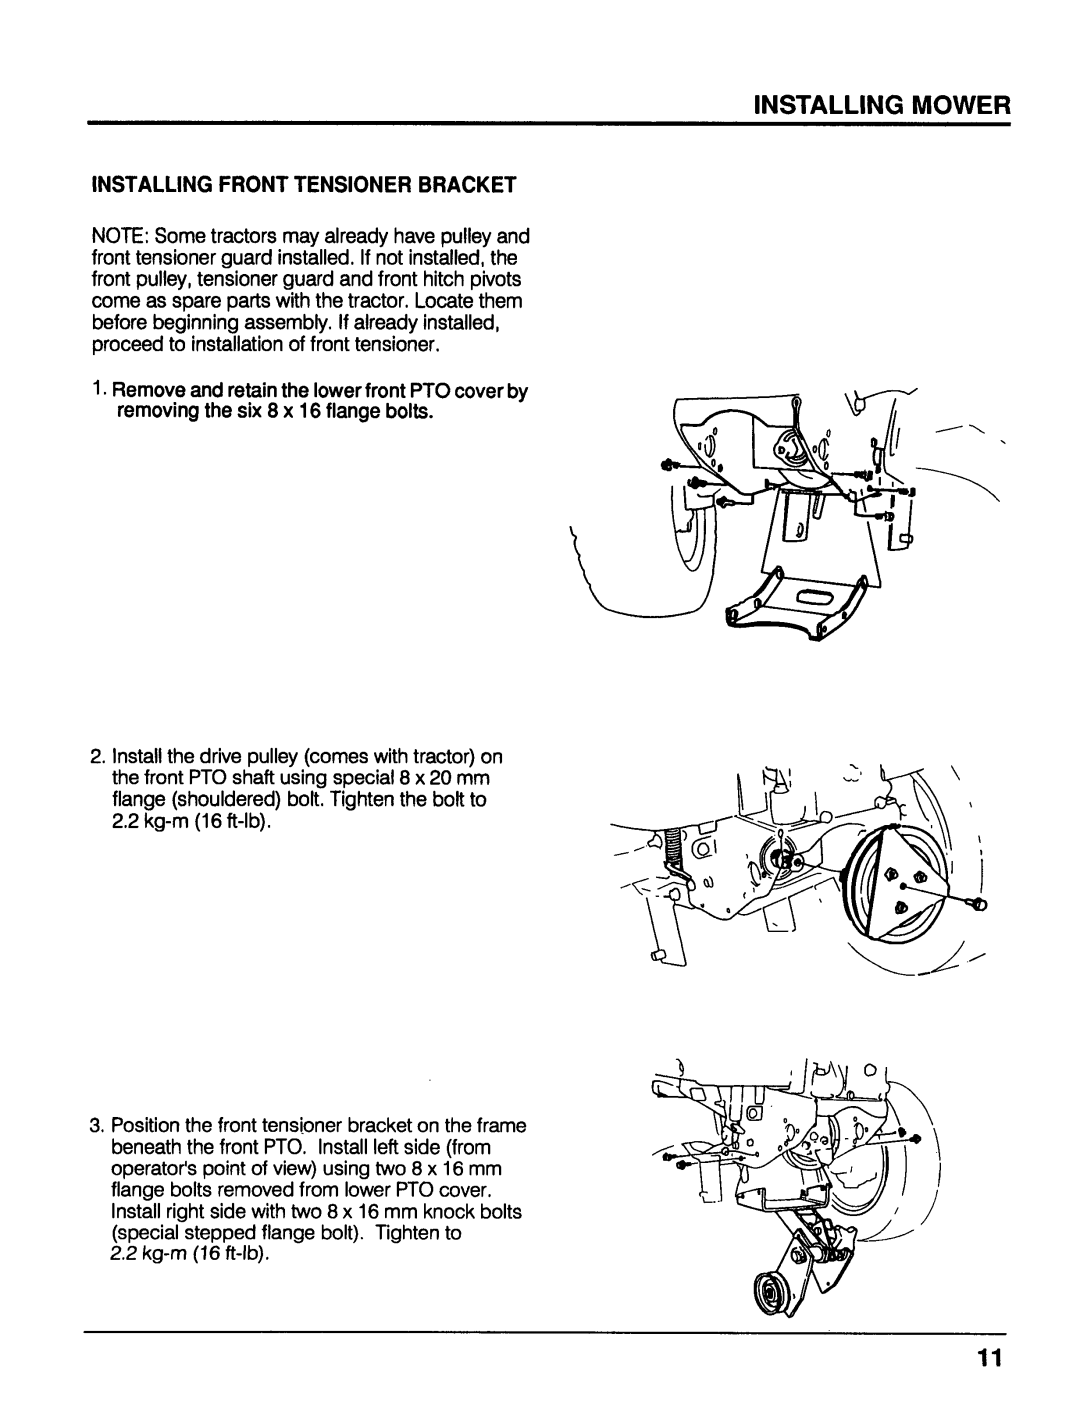 Honda Power Equipment MM52 manual Installing Front Tensioner Bracket 